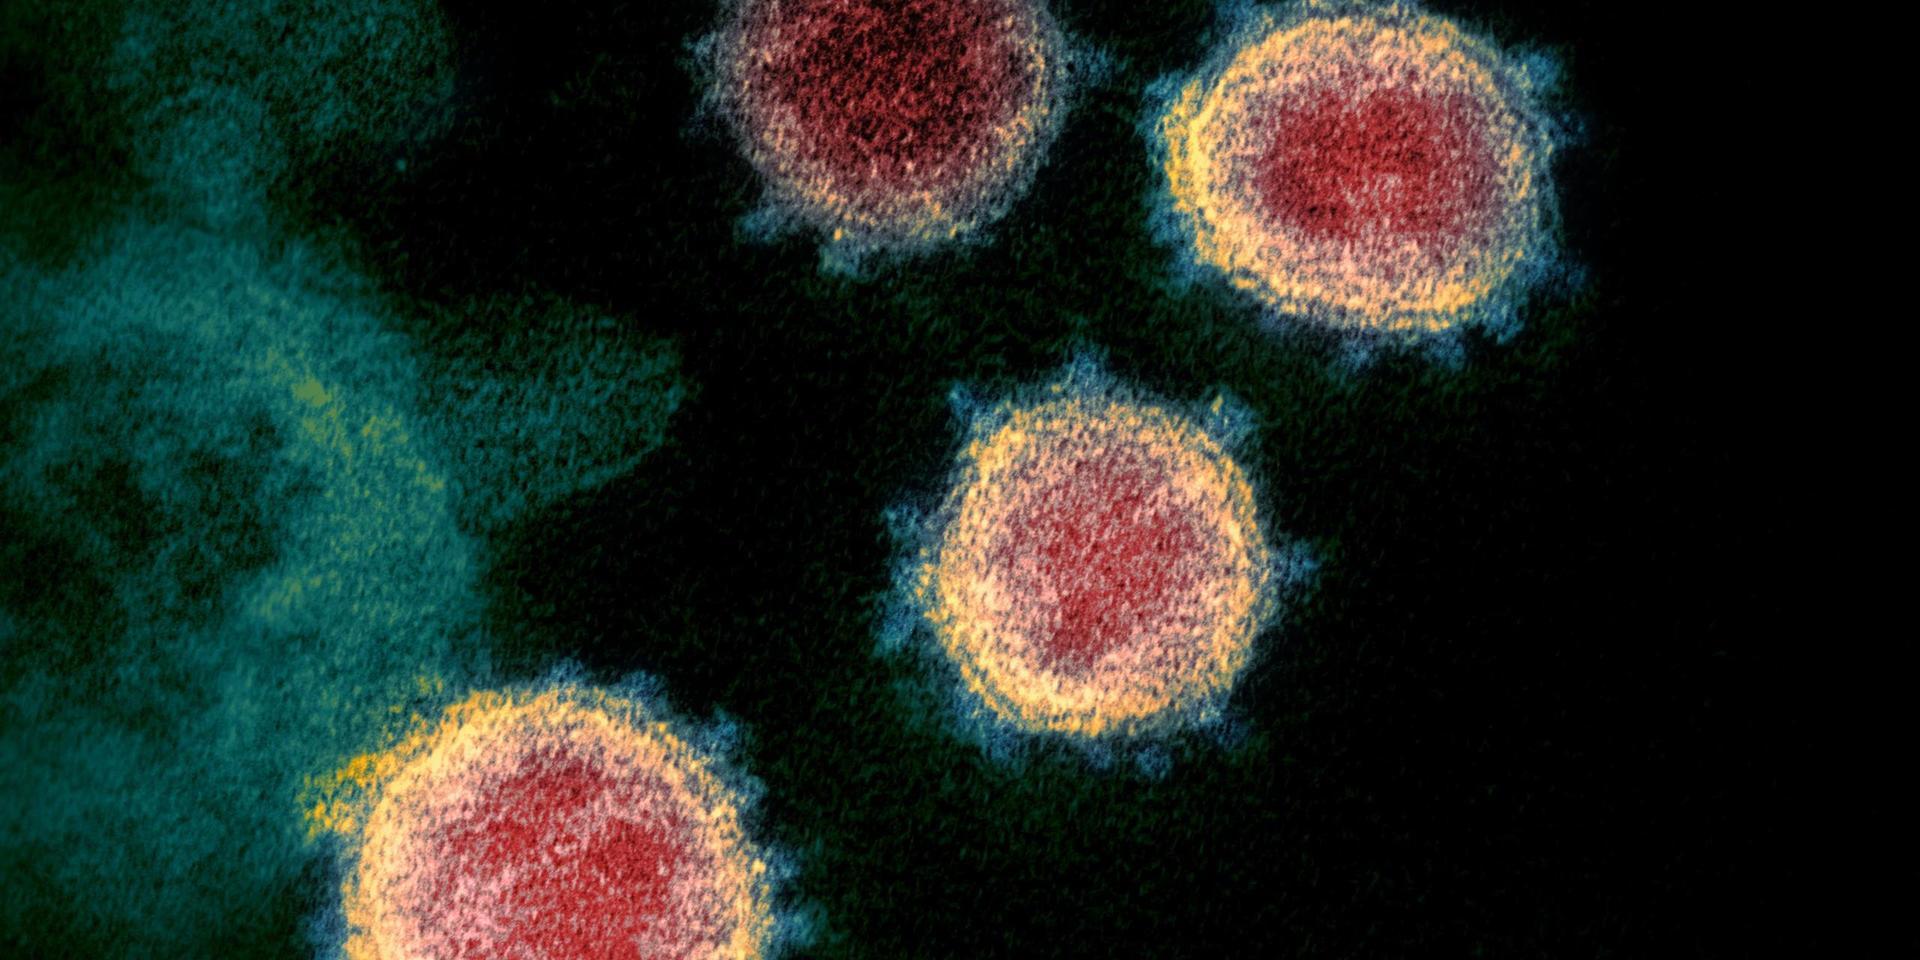 Viruset, som orsakar covid-19, fotat genom mikroskop. 